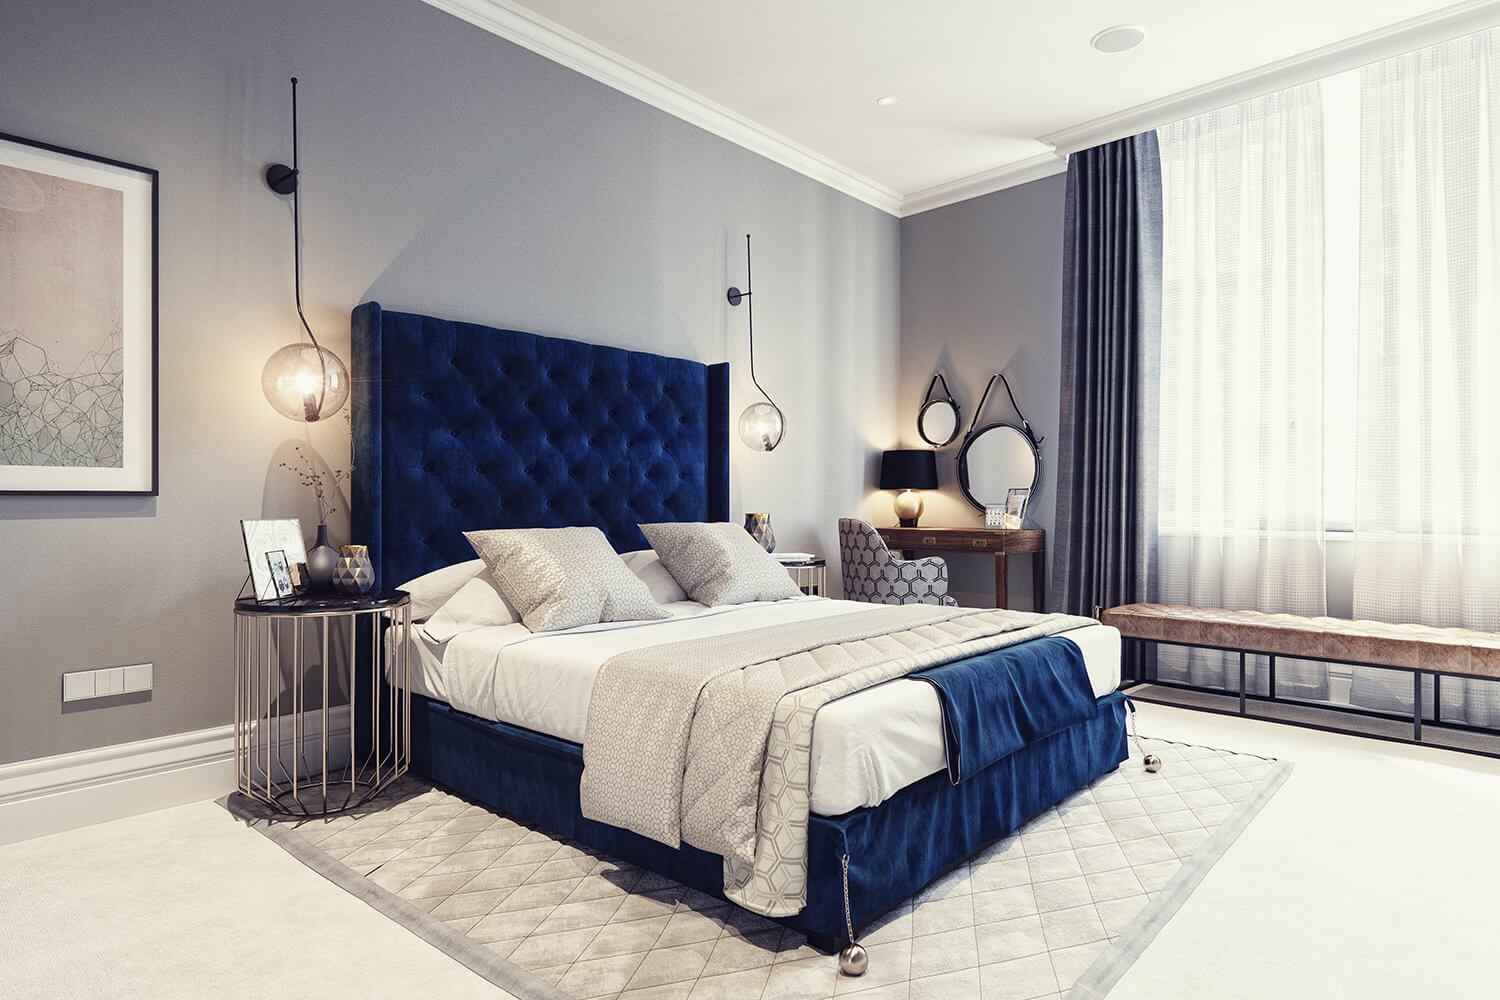 Tavistock apartment bedroom blue fabric bed - cgi visualization